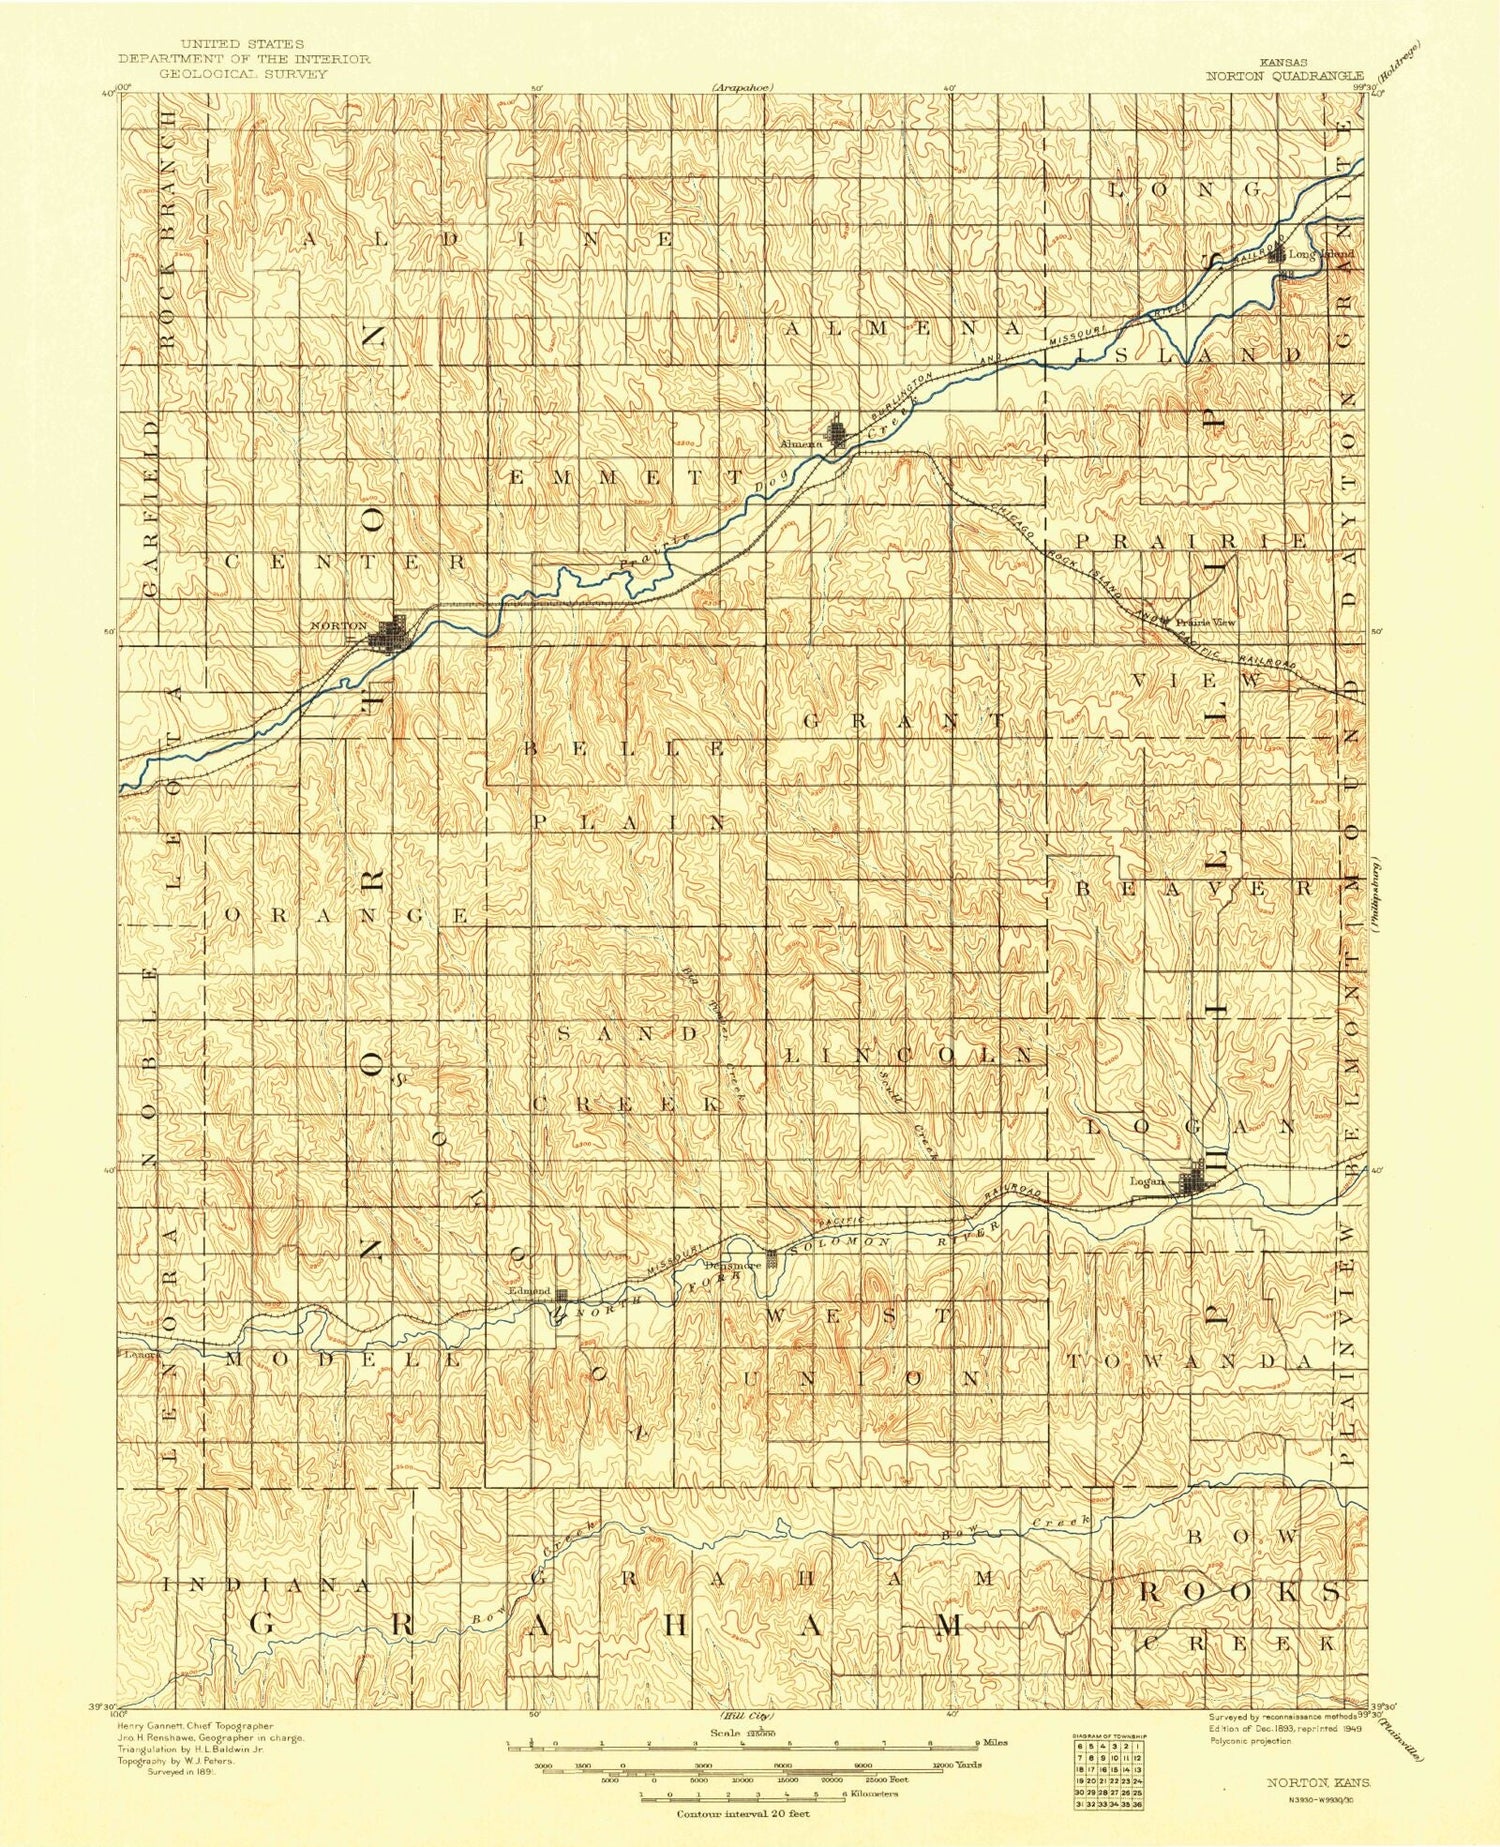 Historic Topo Maps (30'x30' series)